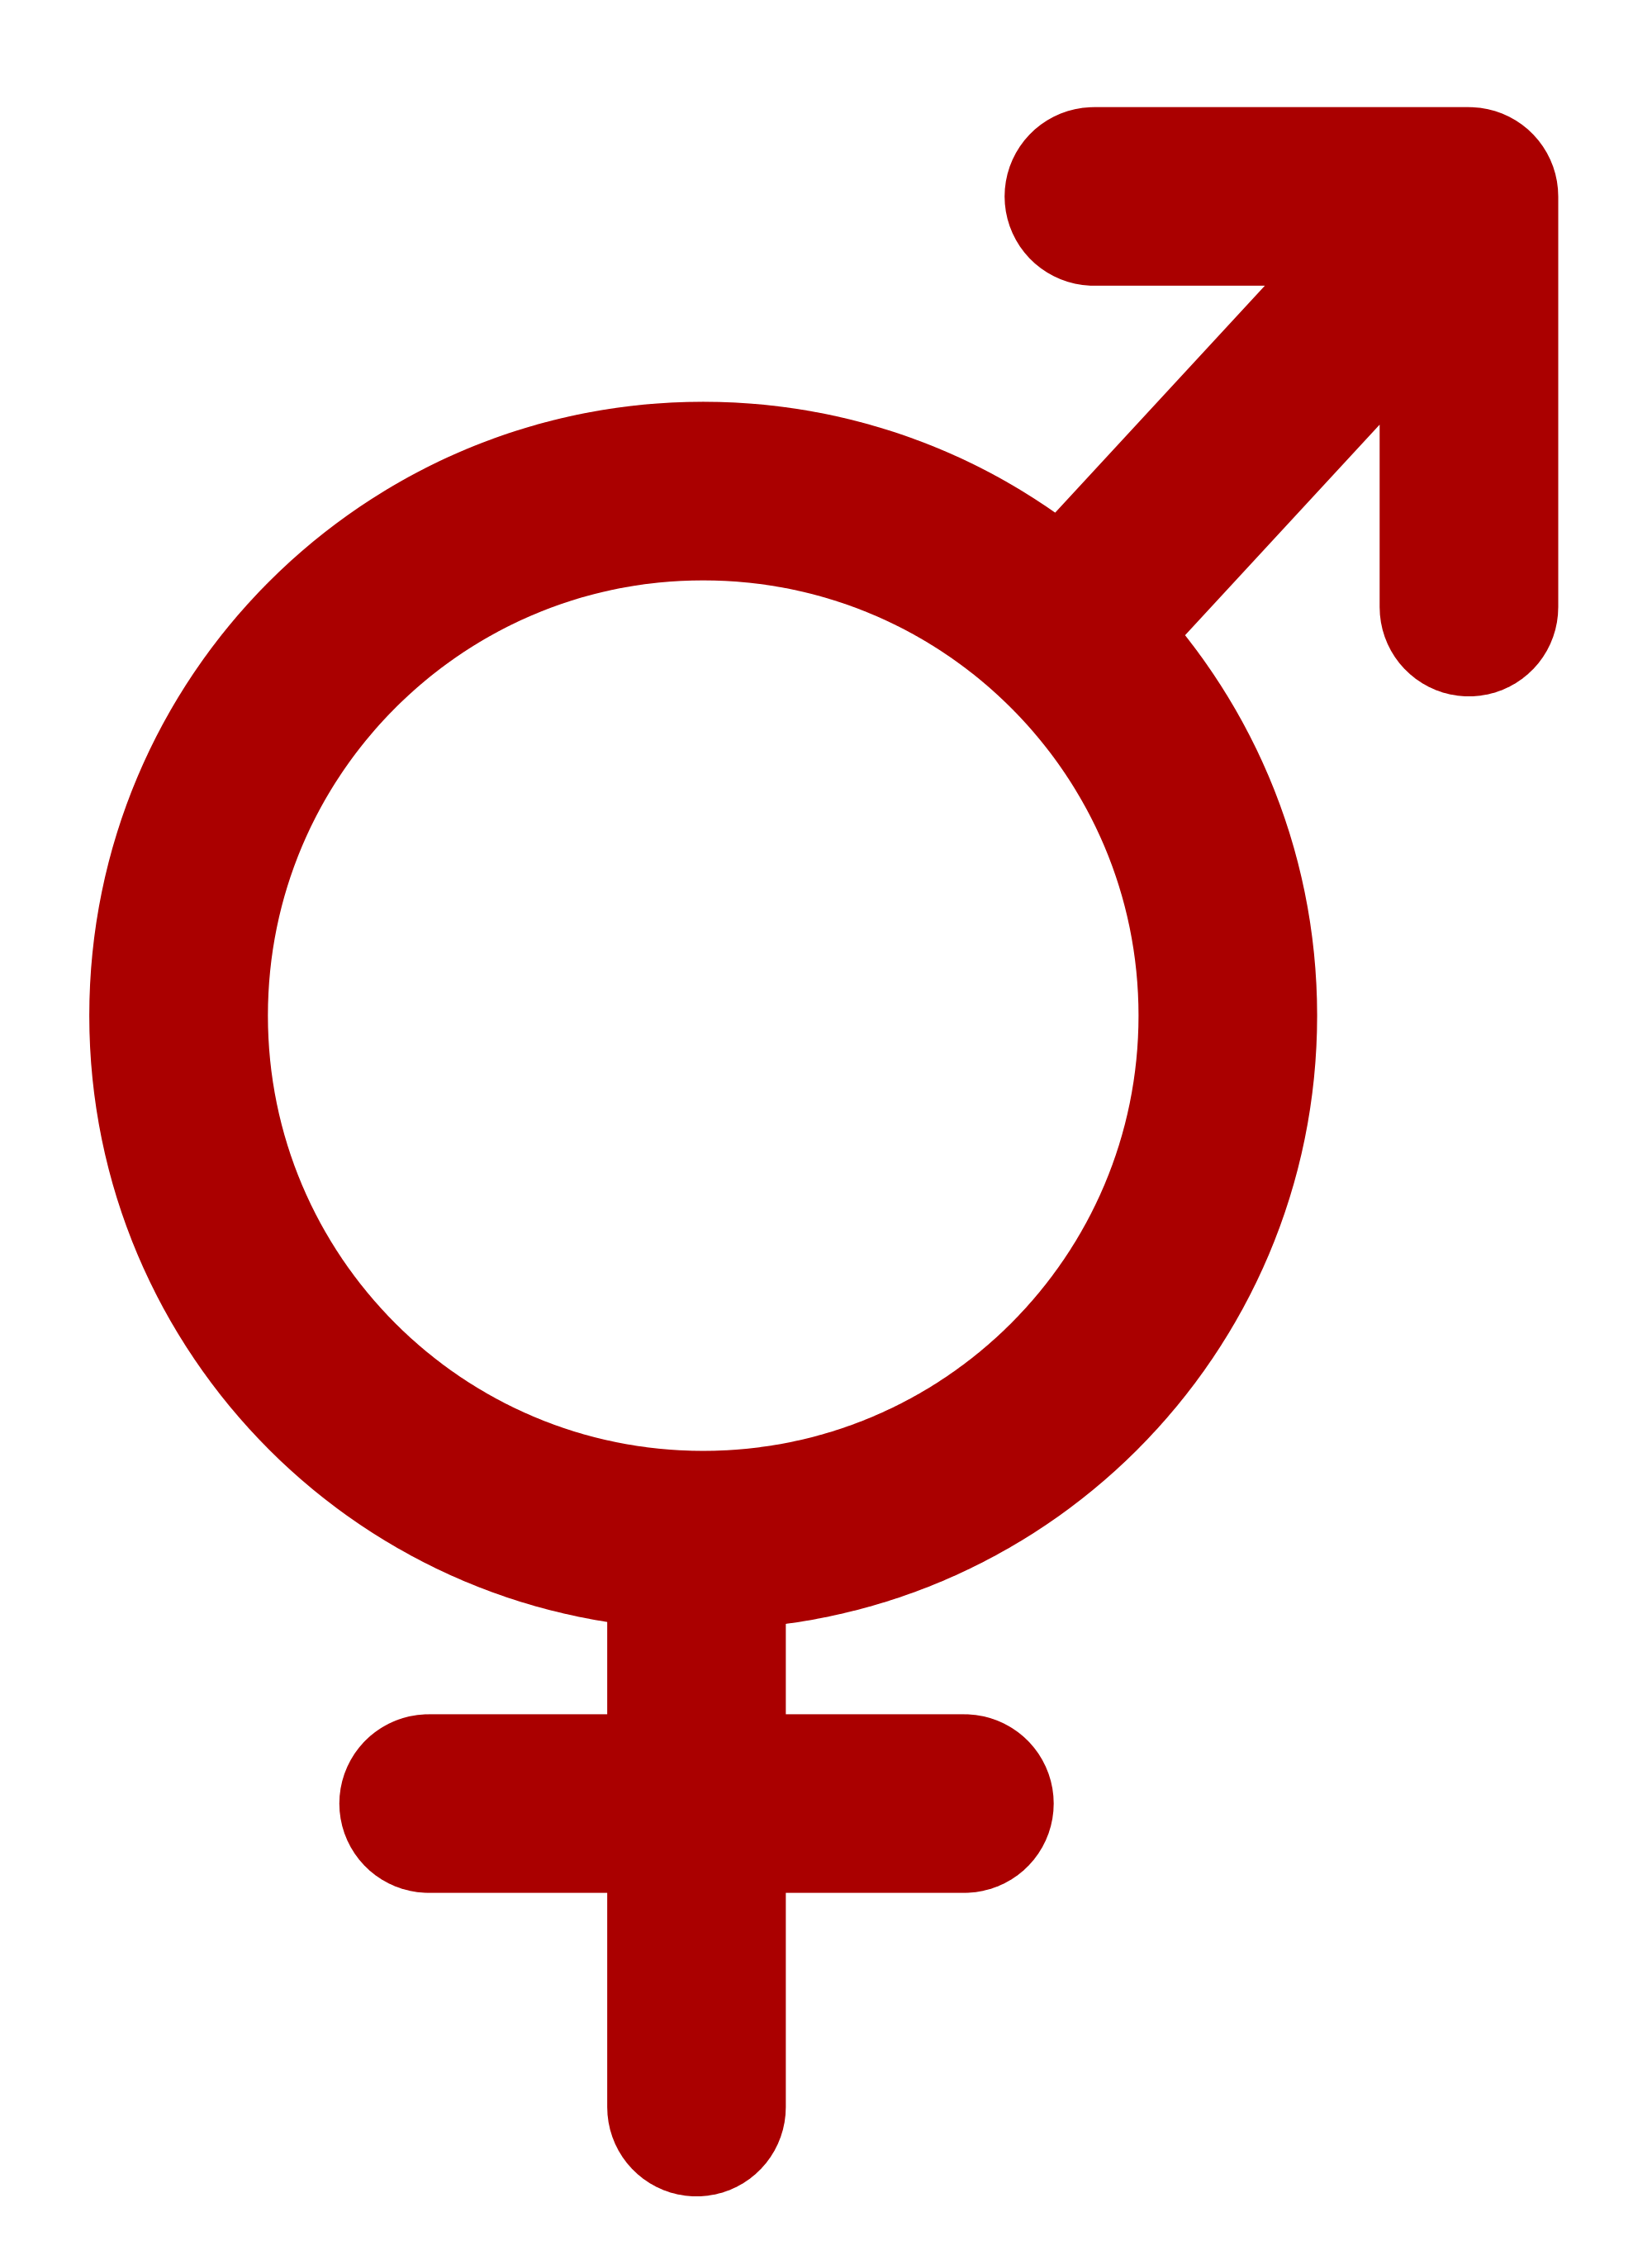 Female dick. Символ гермафродита. Интерсексуал знак. Символ мужчины. Знак мужчины и женщины.